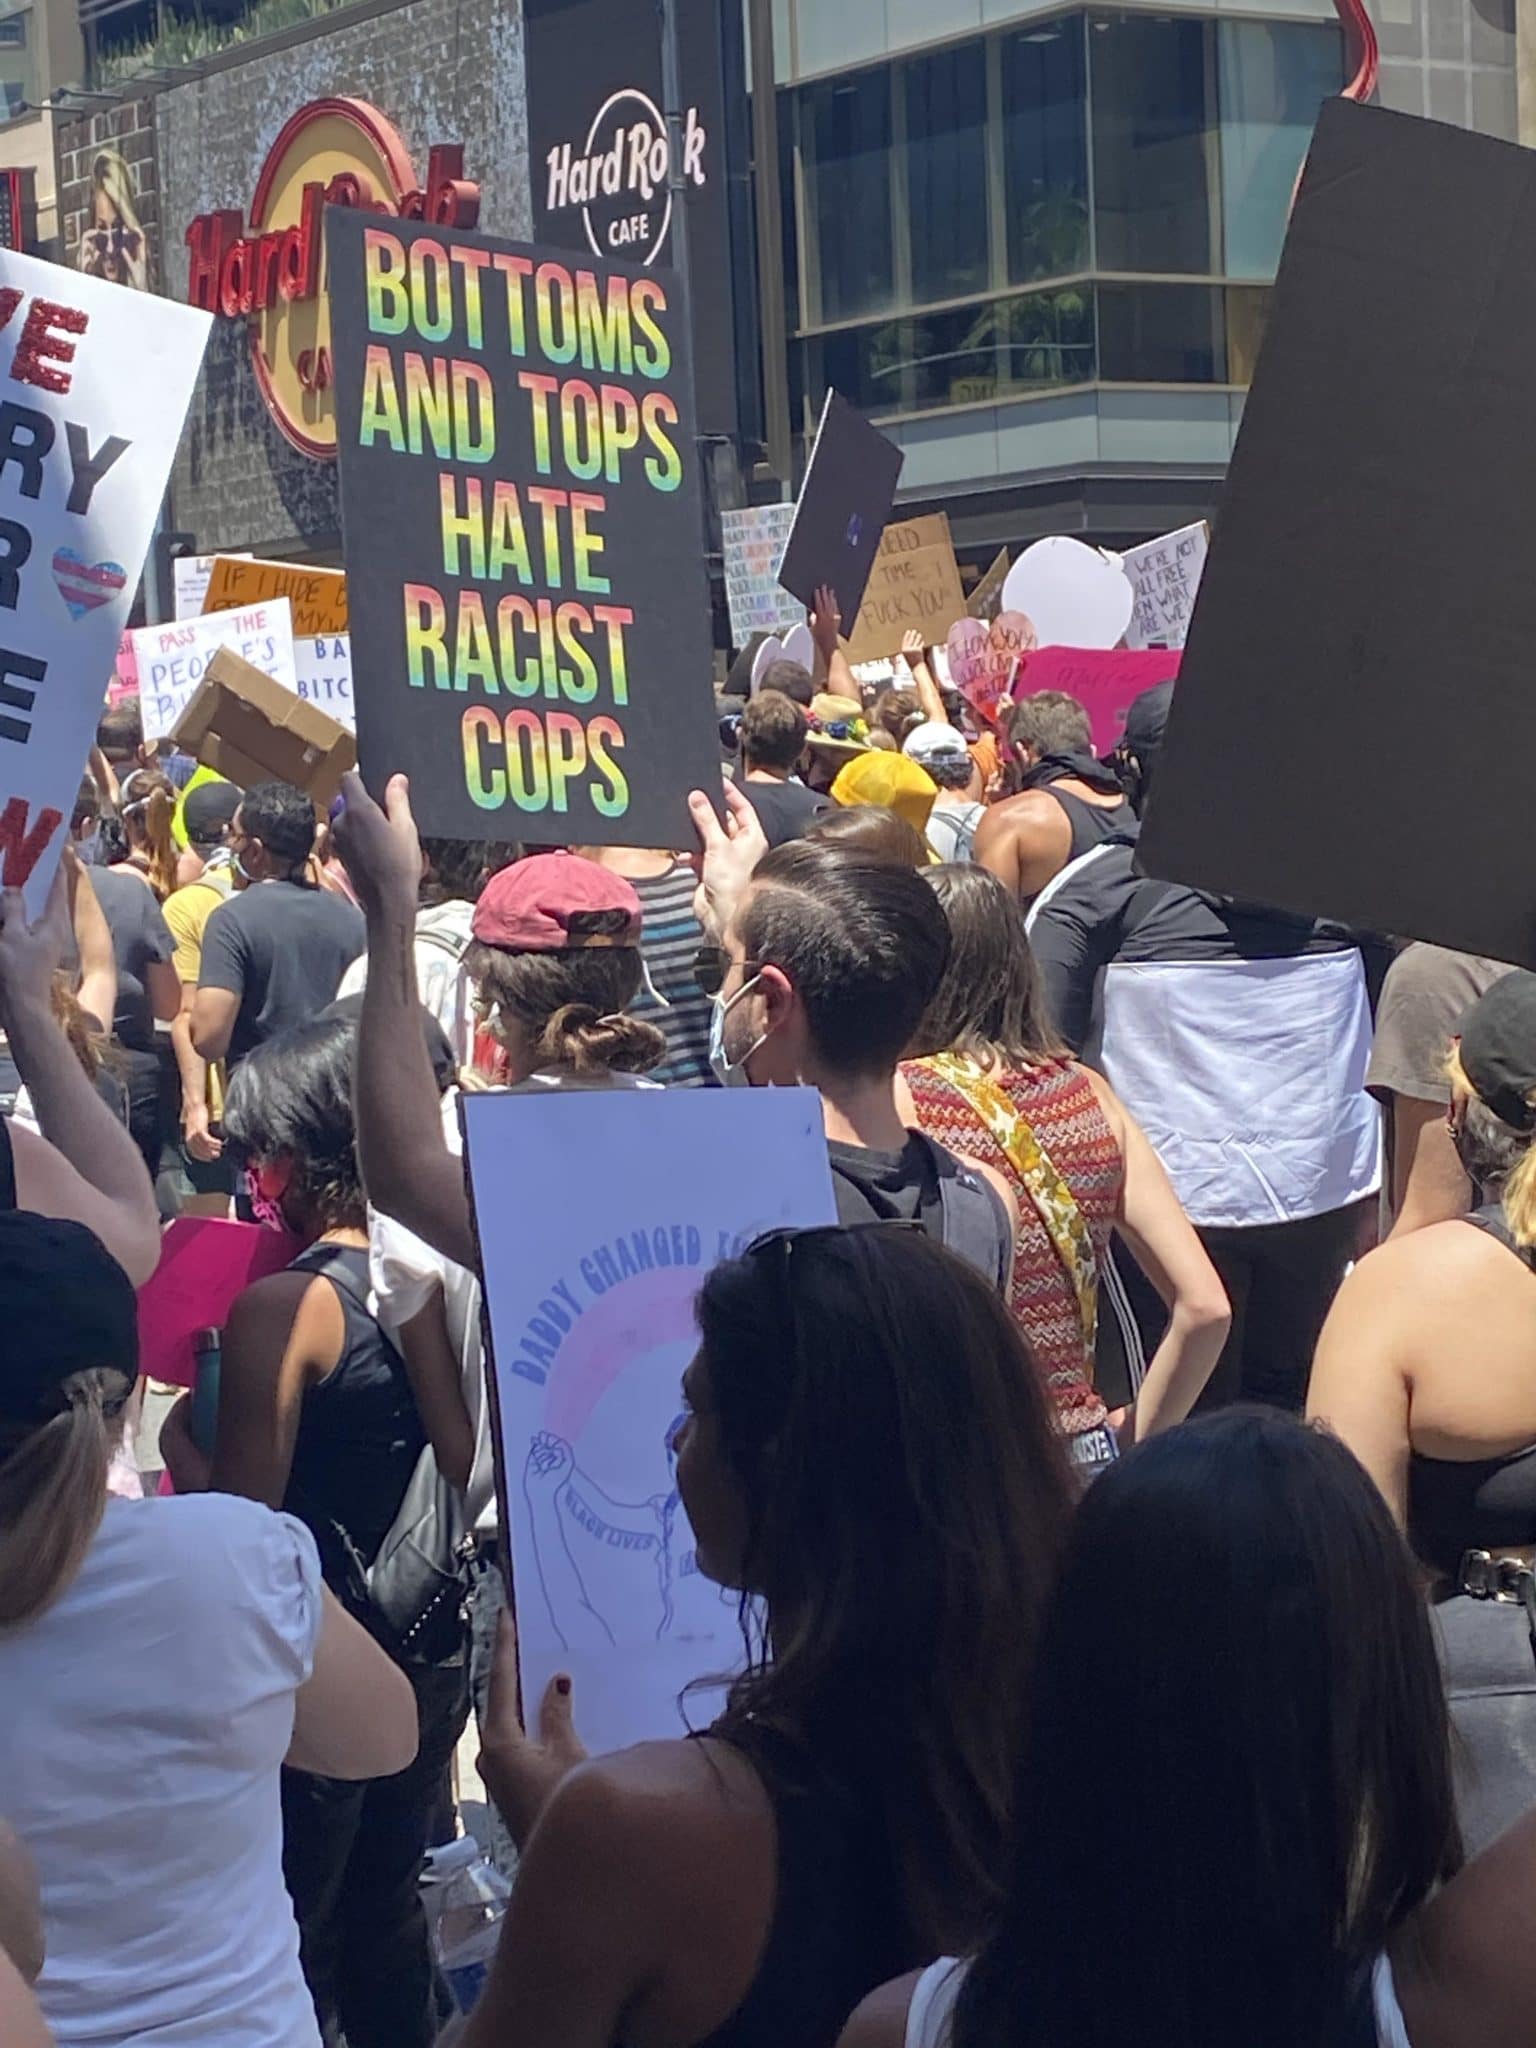 Intrépidos, francos y divertidos carteles de protesta gay que nos inspiran a todos a seguir luchando